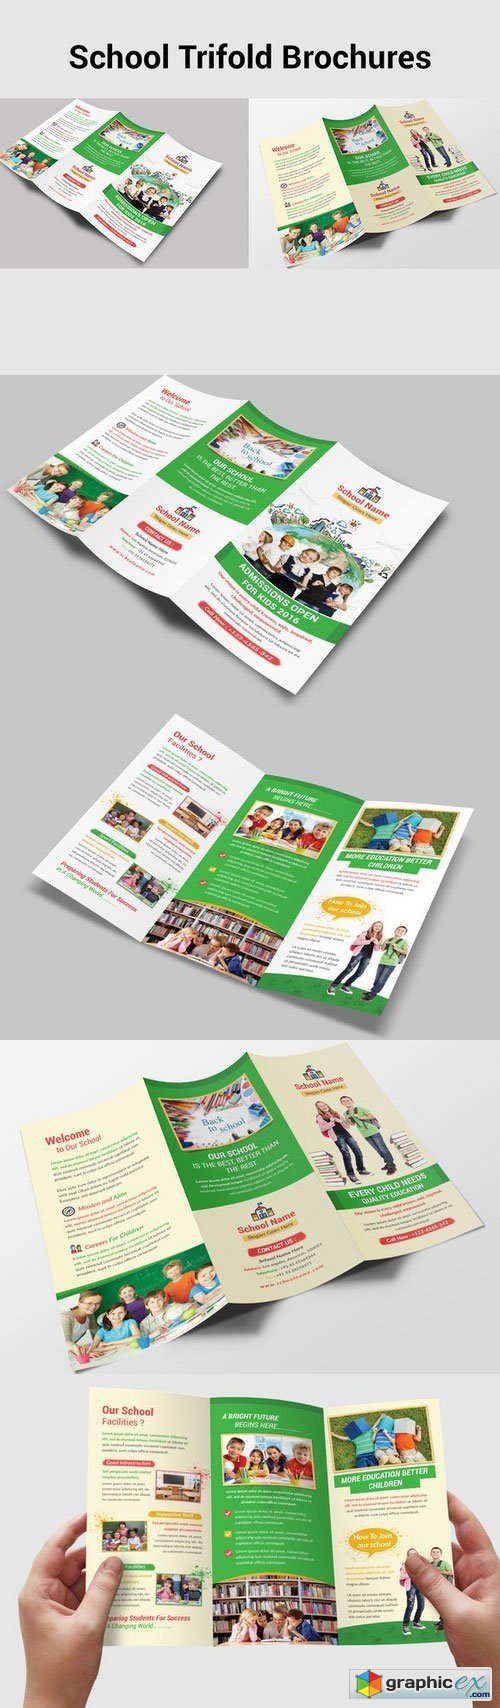 School Trifold Brochures 